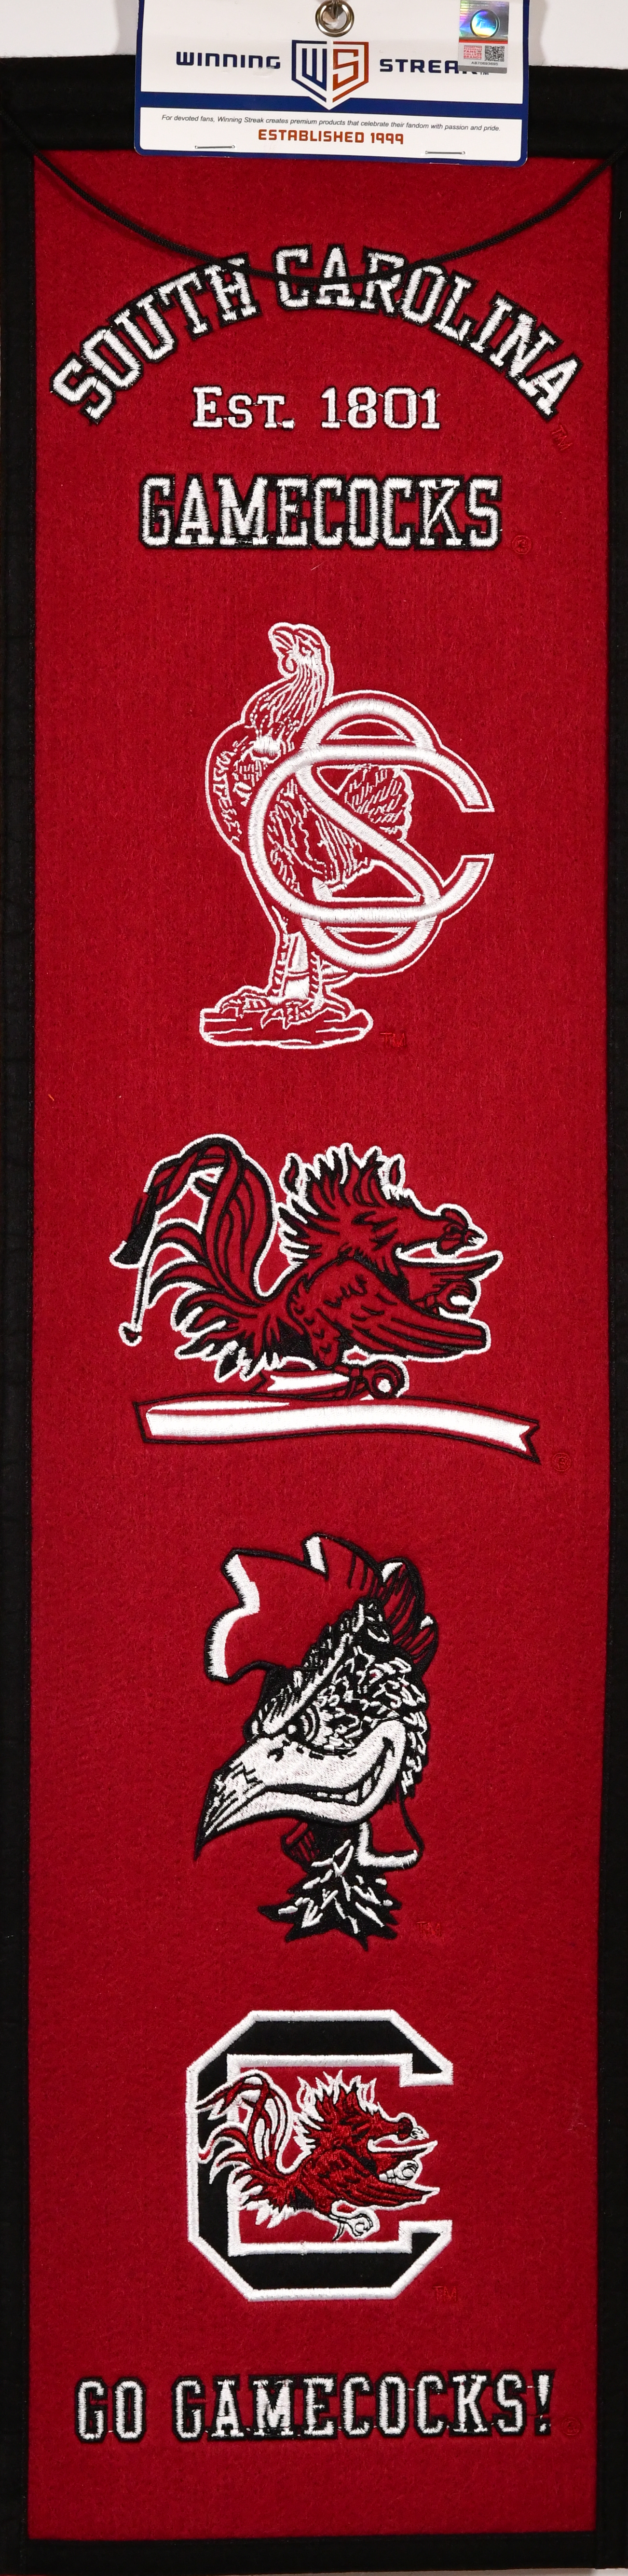 University of South Carolina Heritage Banner